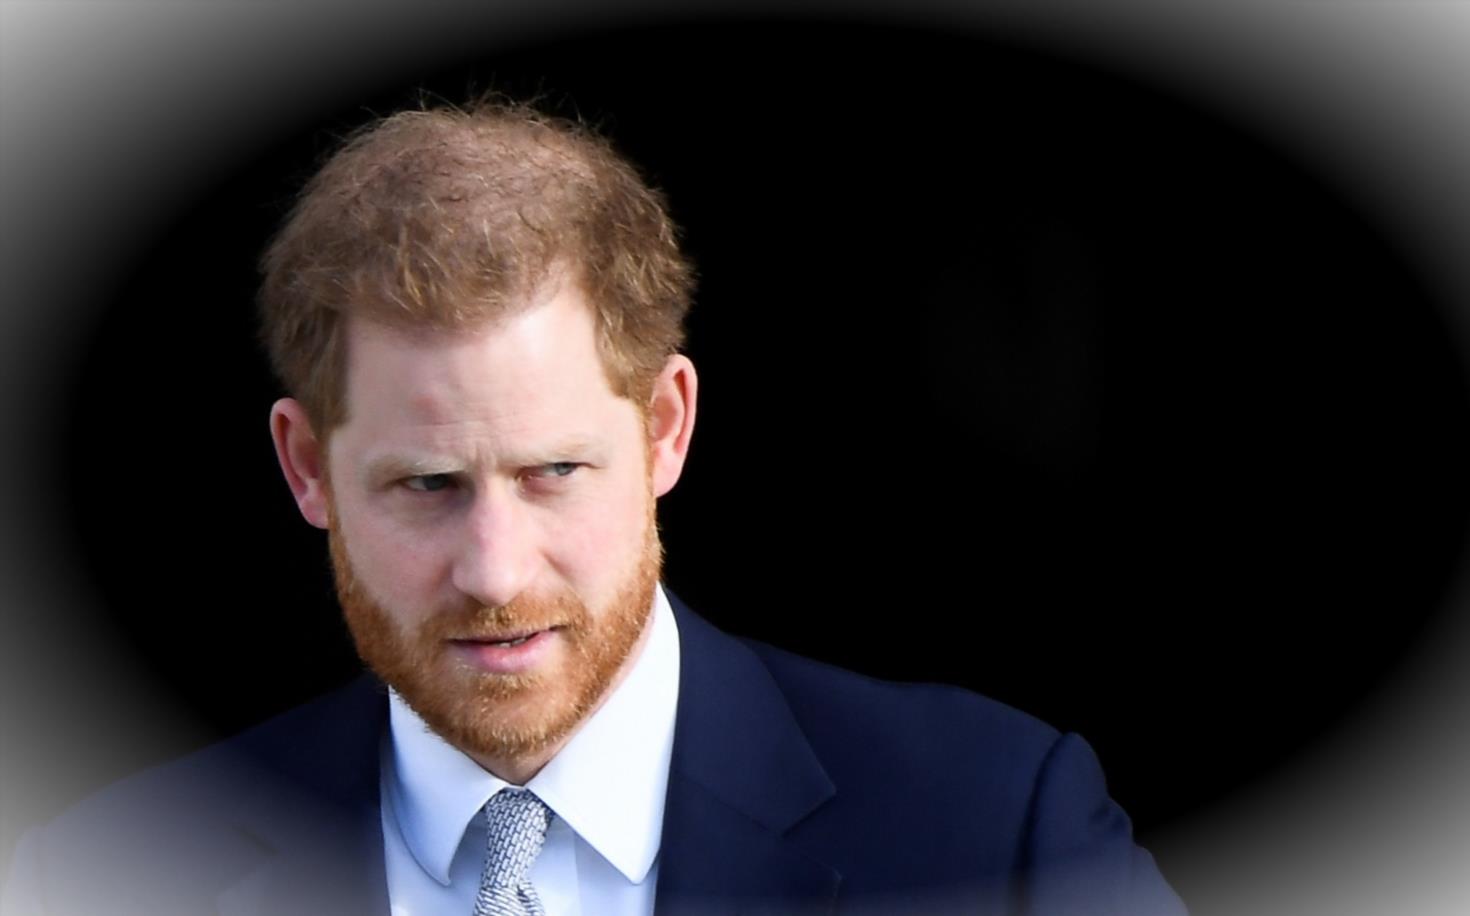 Prince Harrys Unexpected London Appearance Bolsters CoronationgcO6P5Ftr 4